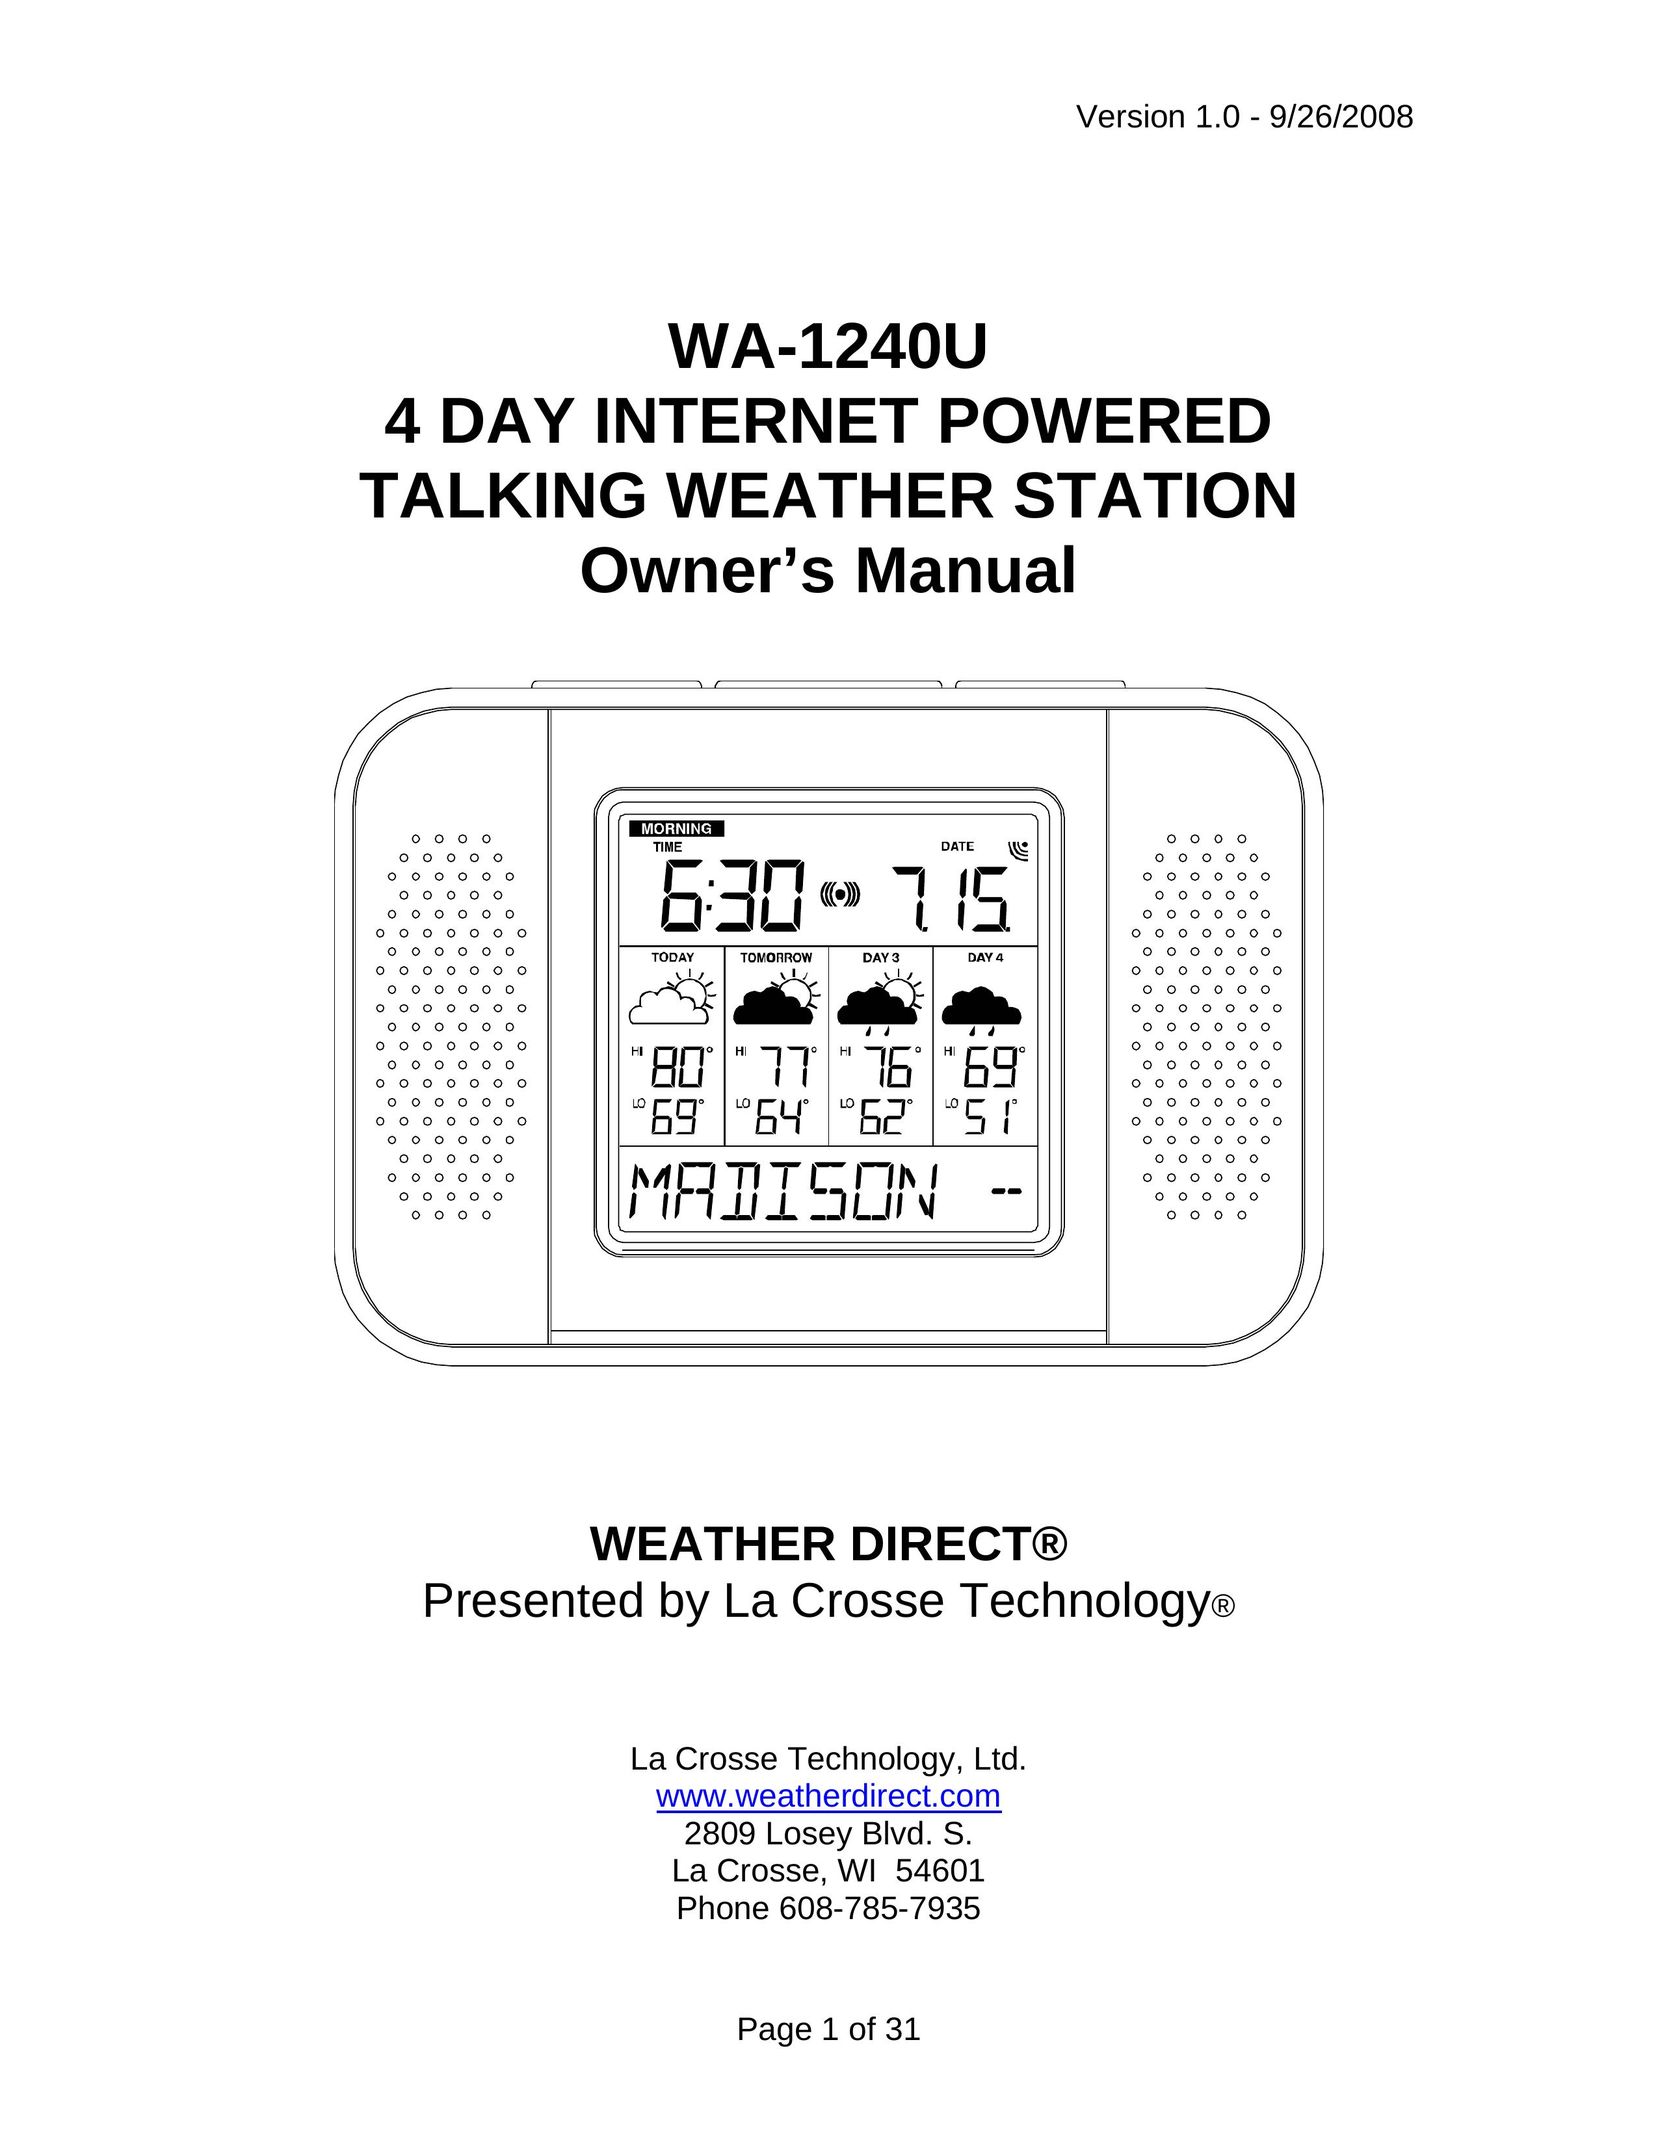 La Crosse Technology WA-1240U Portable Radio User Manual